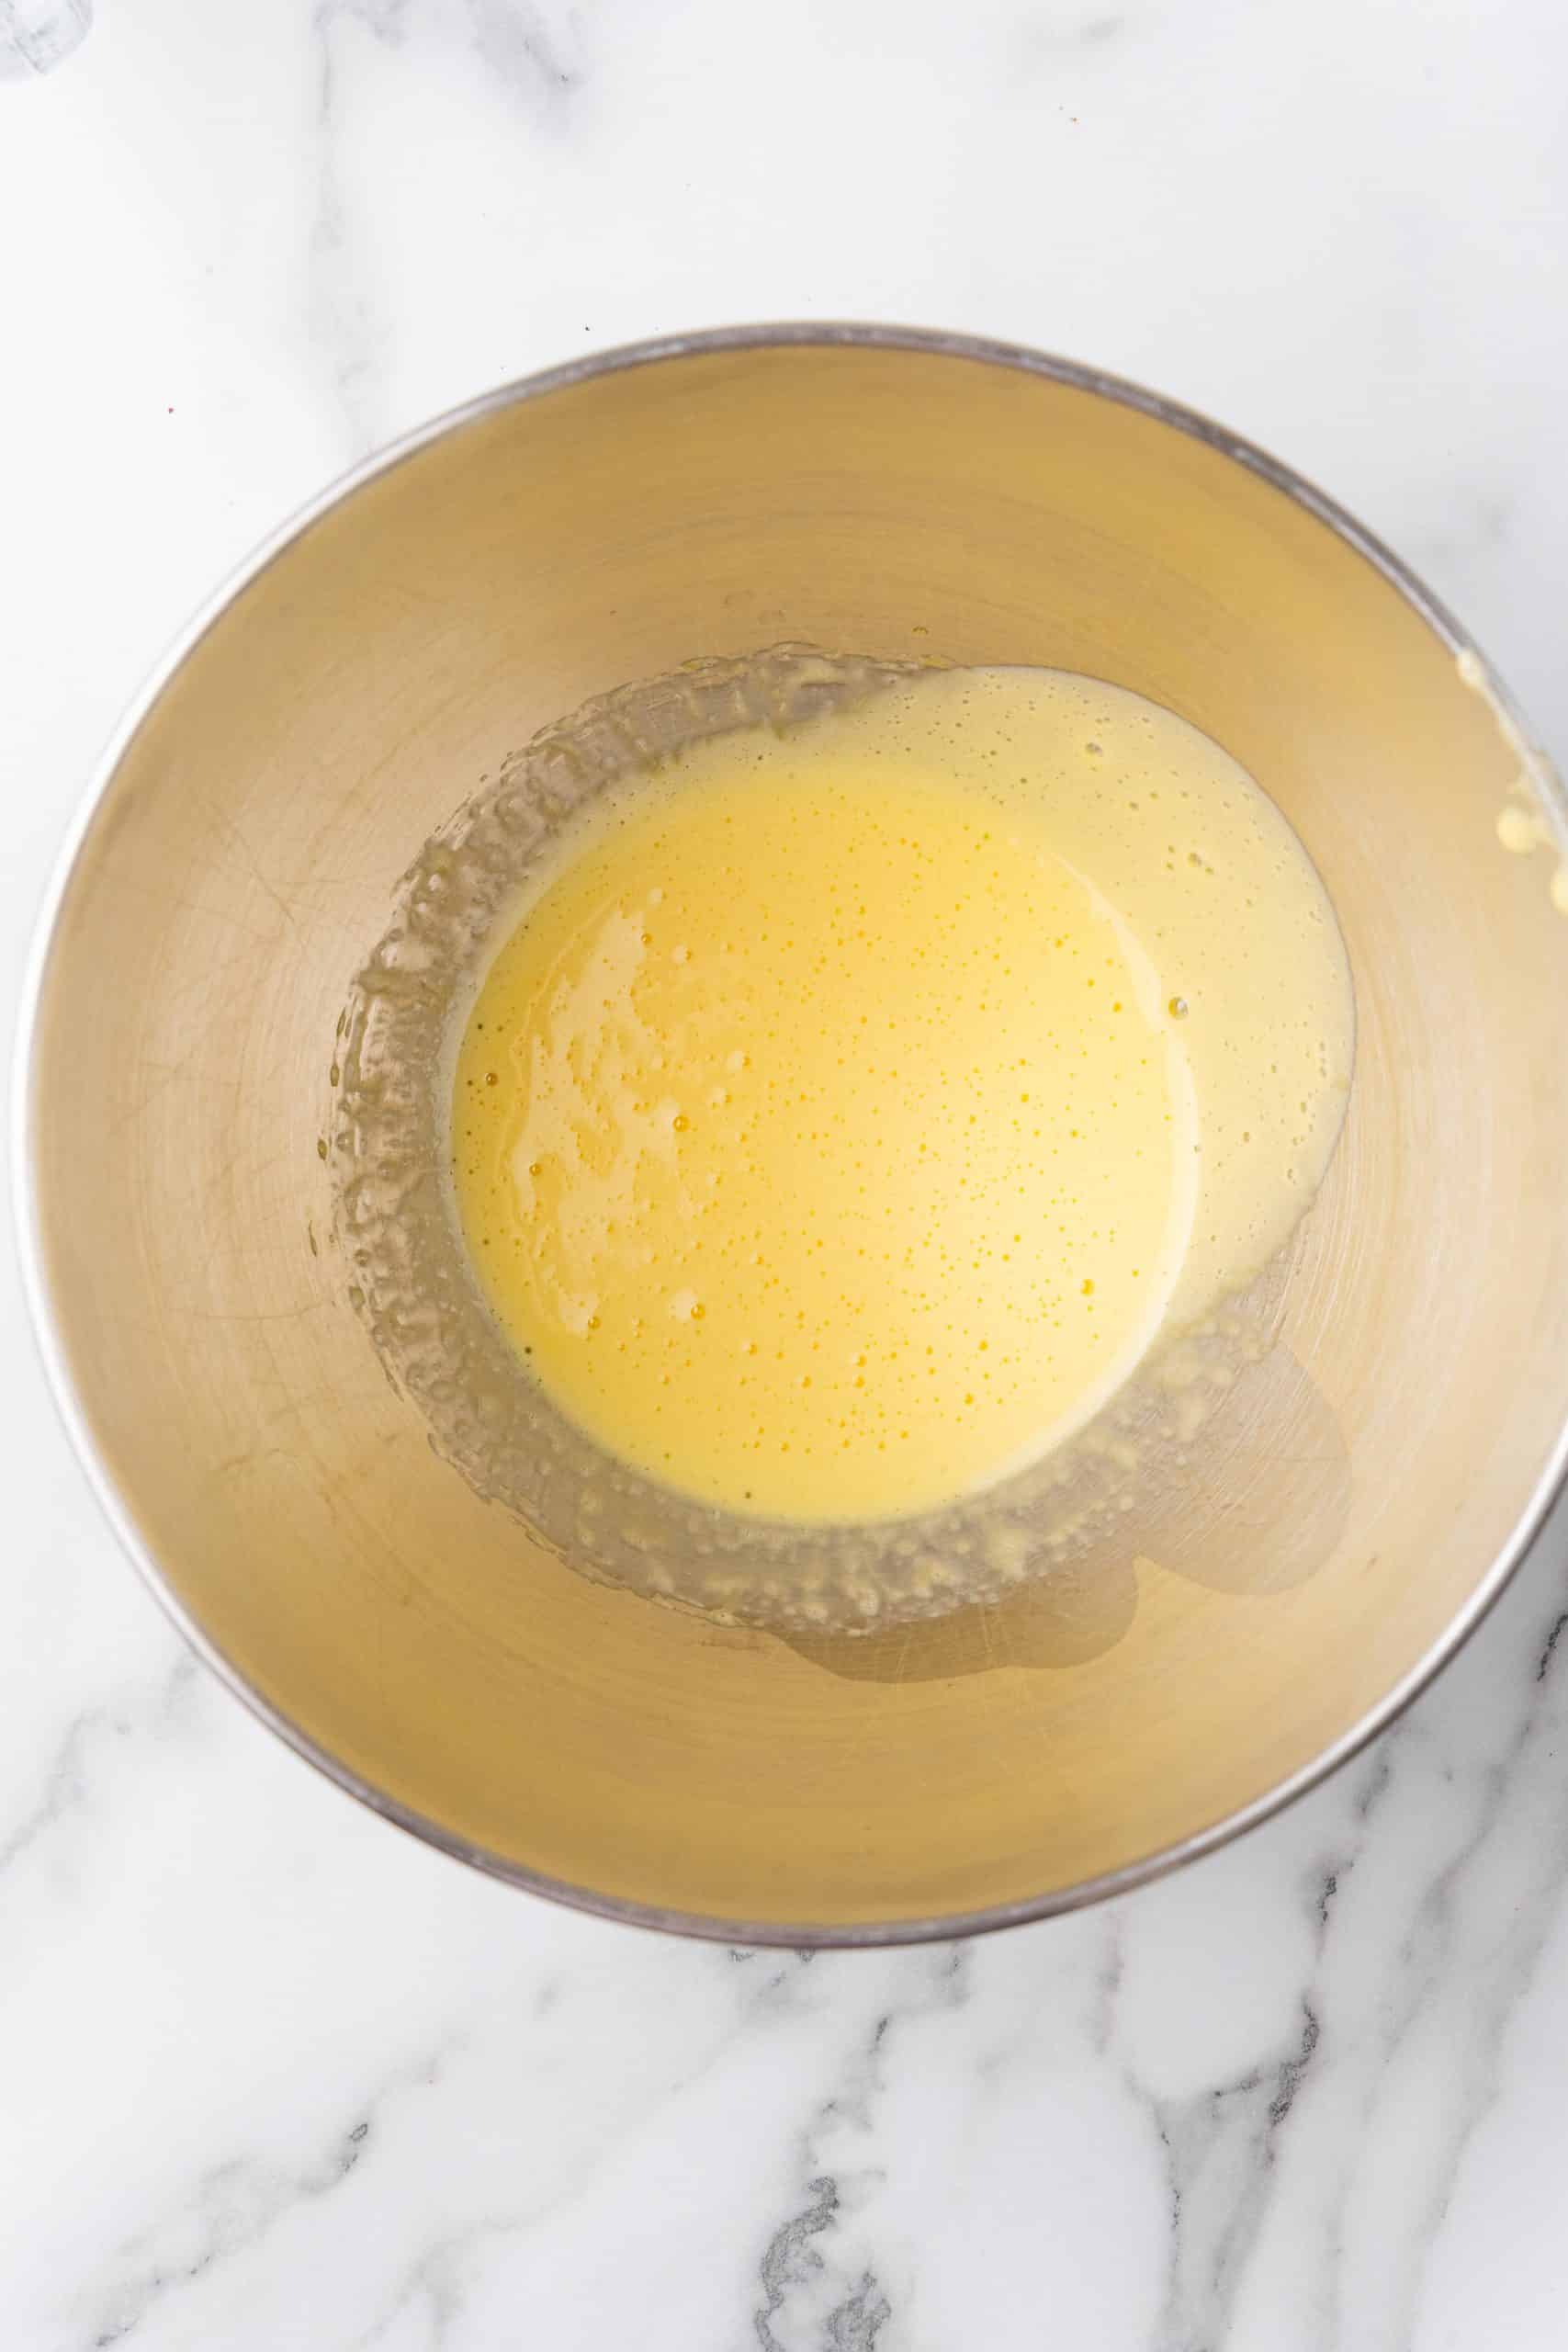 beaten eggs in a metal mixing bowl